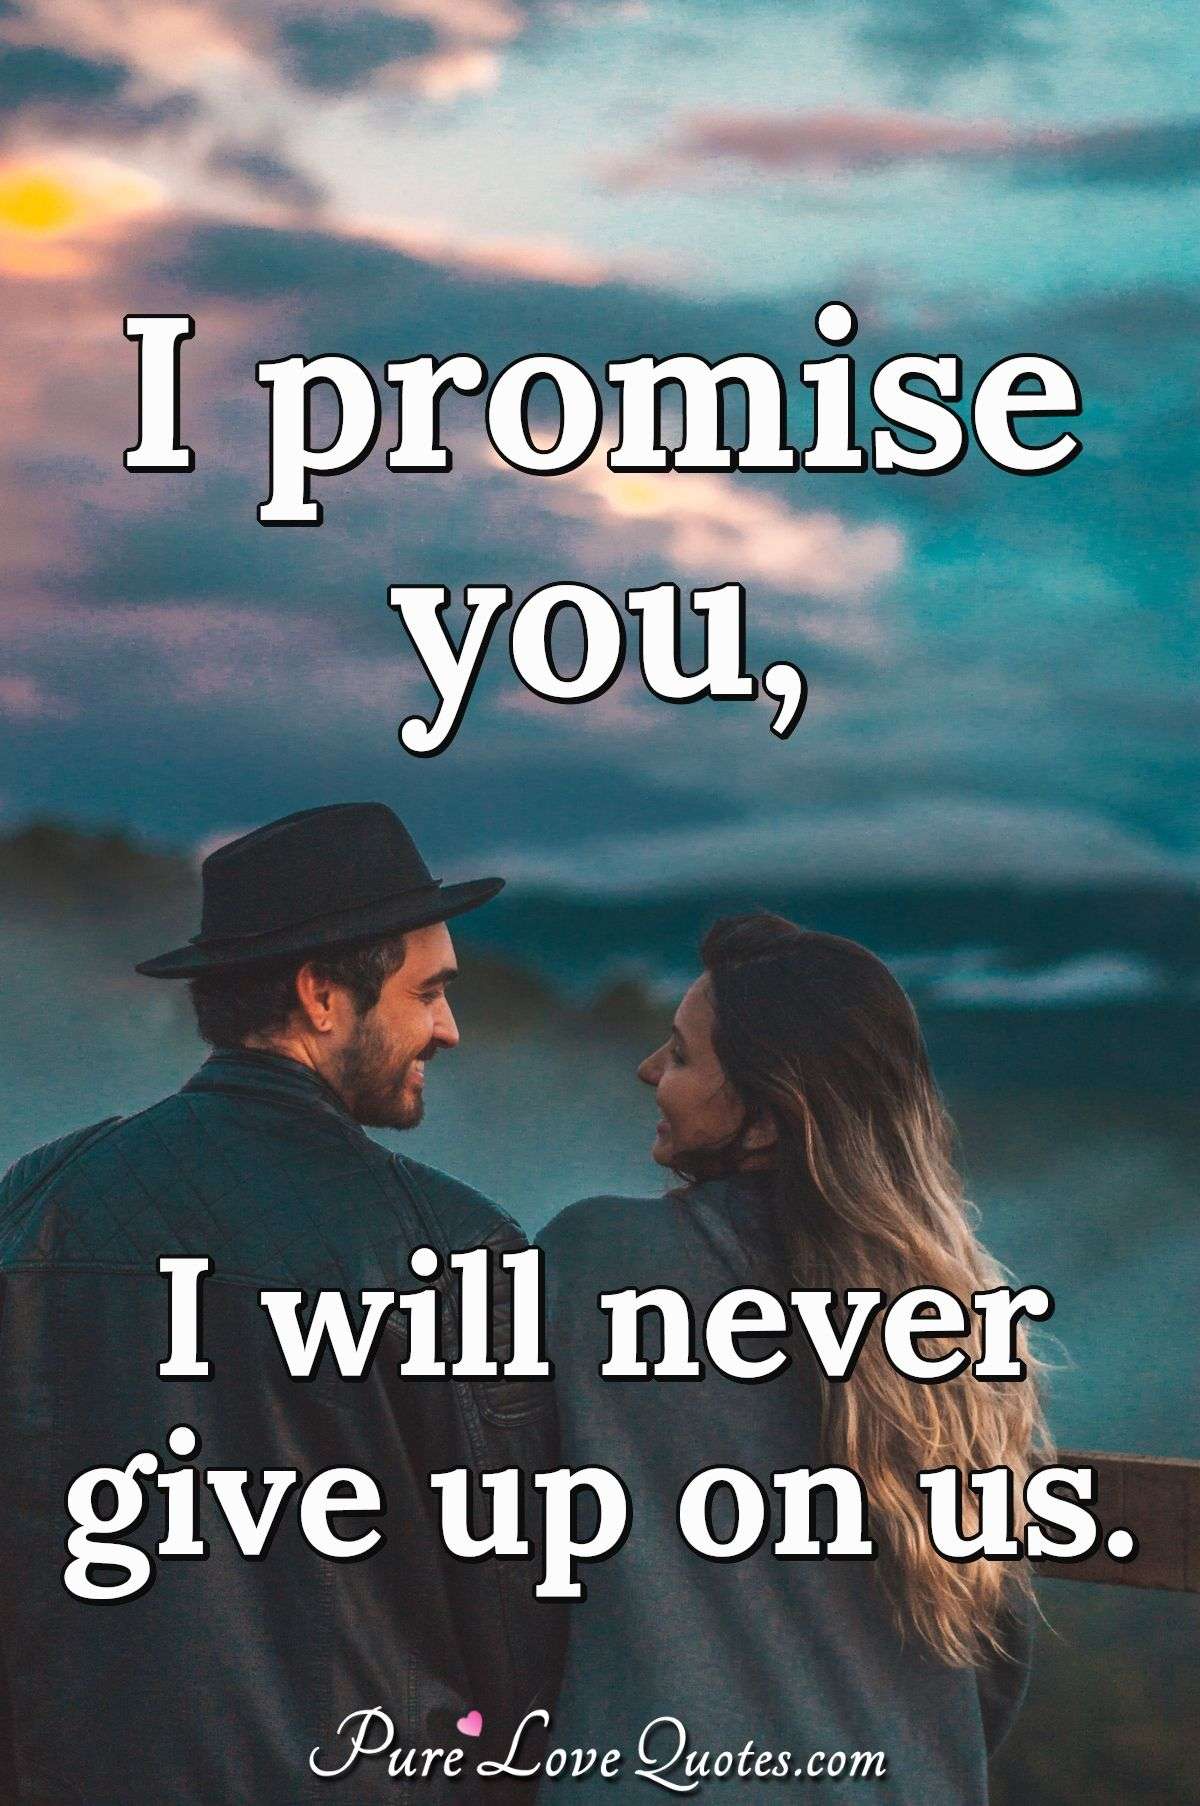 I promise you back. I Promise you. Обещание i Promise. I Promise любовь. I Promise предложение.